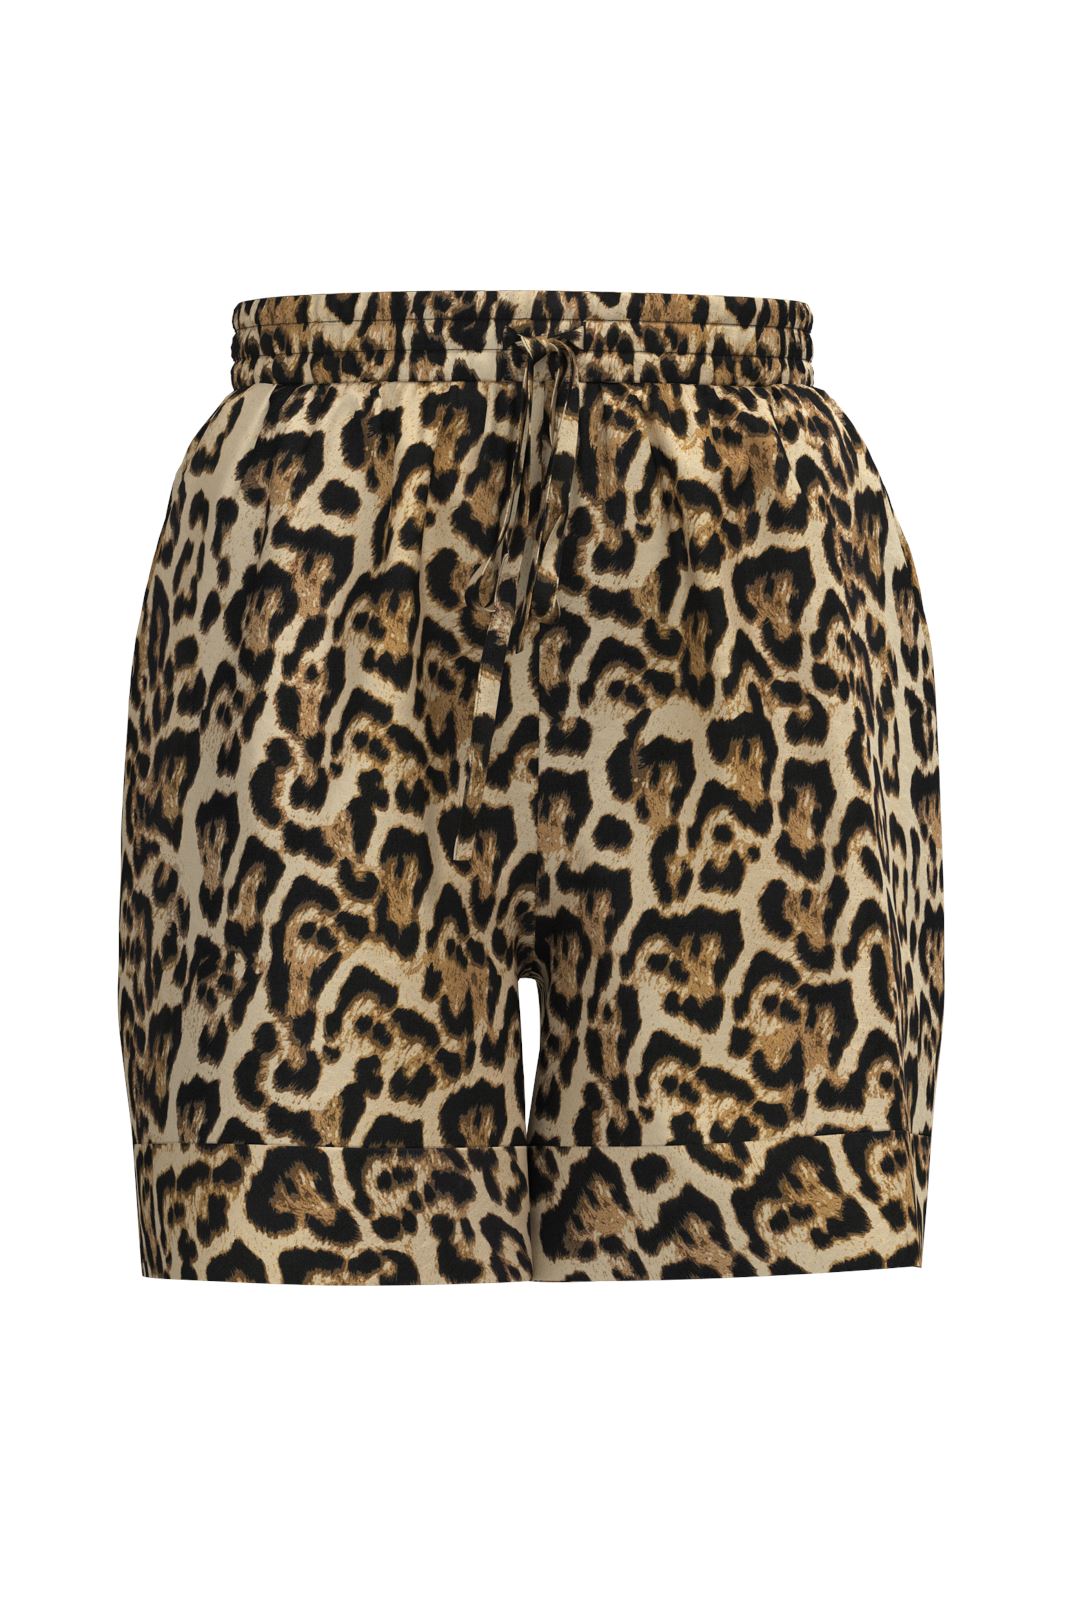 Vila - Vichia Shorts - 4719001 Birch Leopard